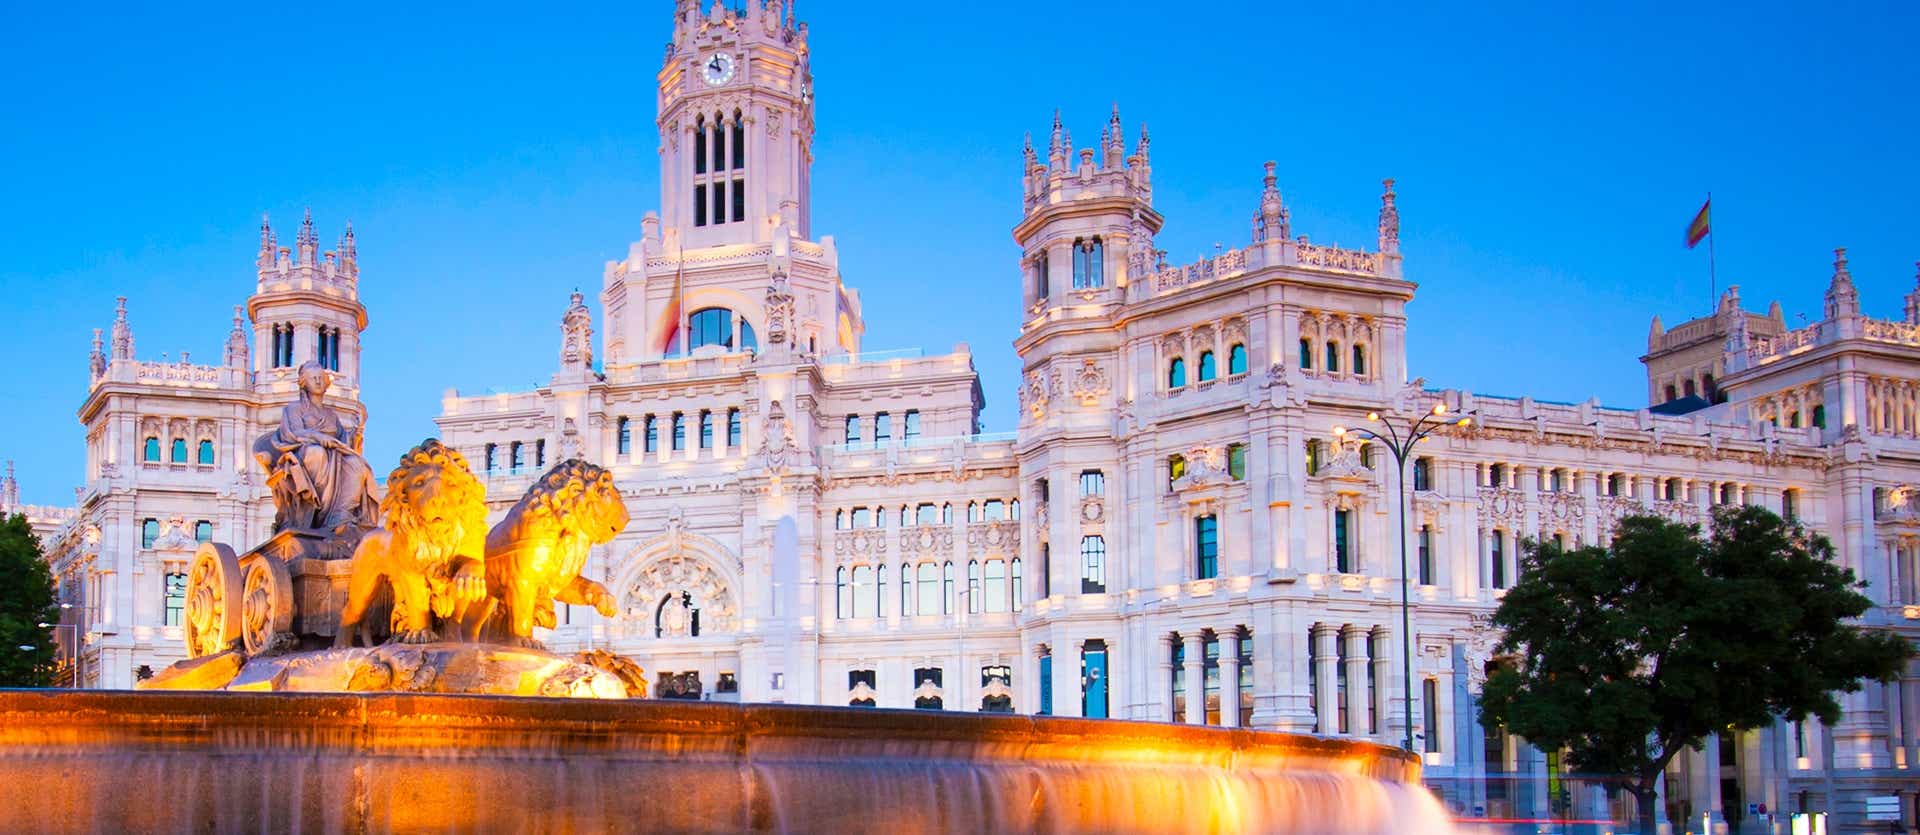 La Cibeles Fountain <span class="iconos separador"></span> Madrid <span class="iconos separador"></span> Spain